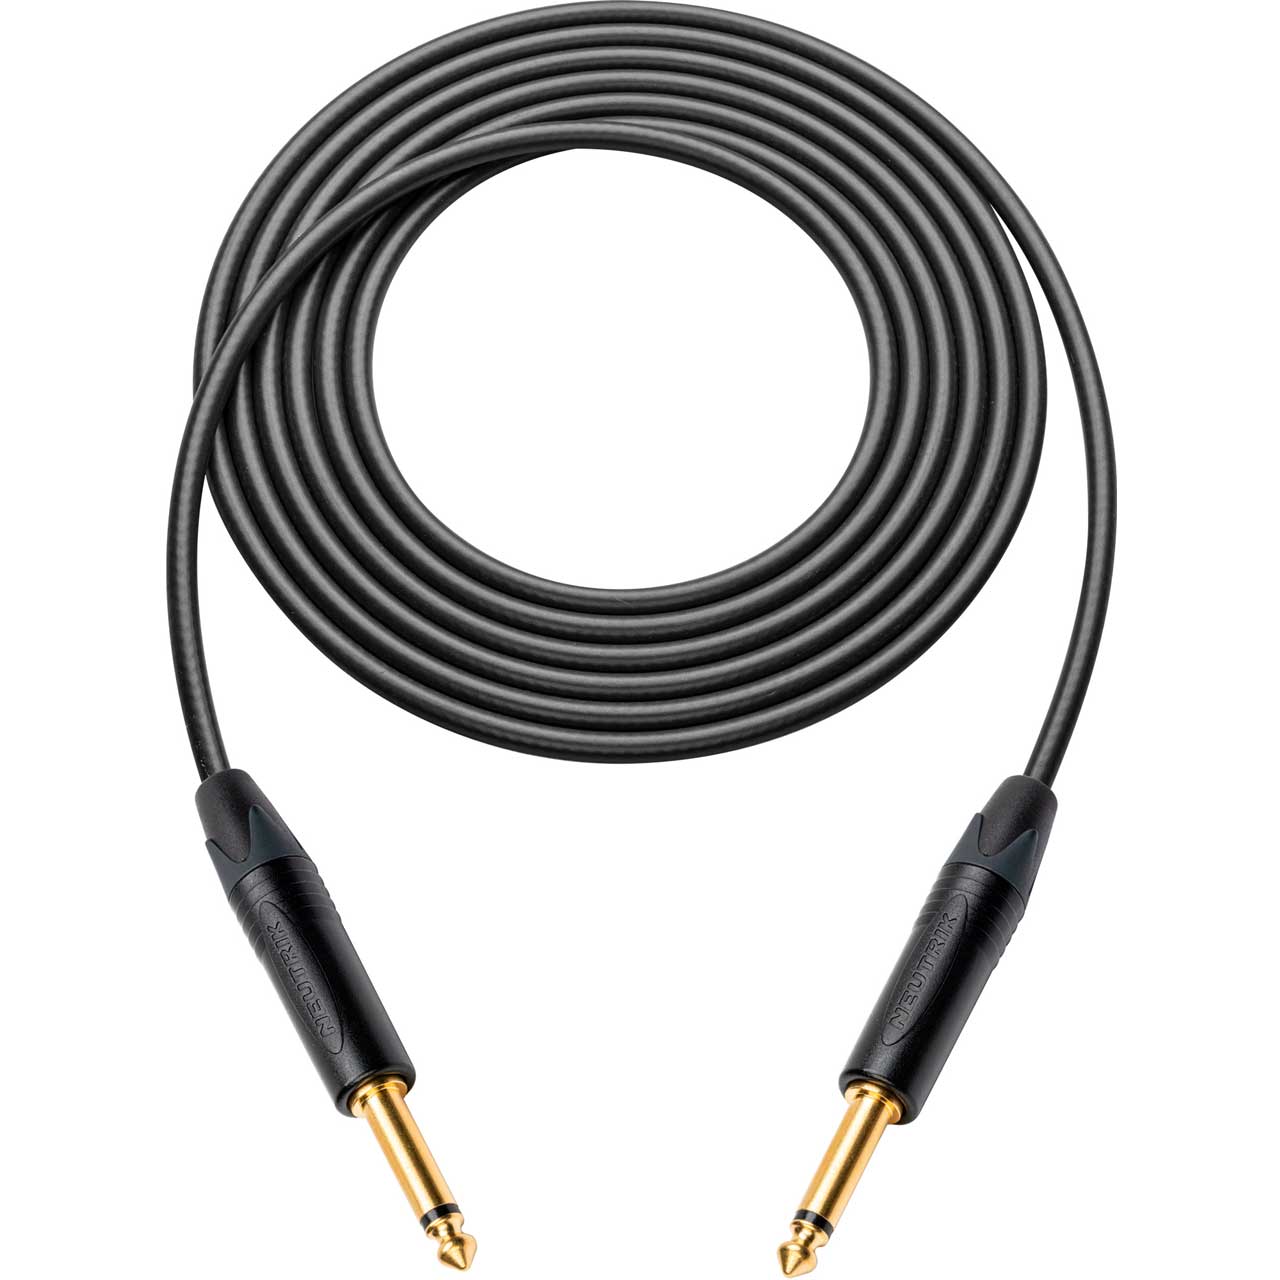 Sescom GS6-TSTS-3 Instrument Cable Canare GS-6 1/4 TS Mono Male to 1/4 TS Mono Male w/ Neutrik PX Plugs Black - 3 Foot